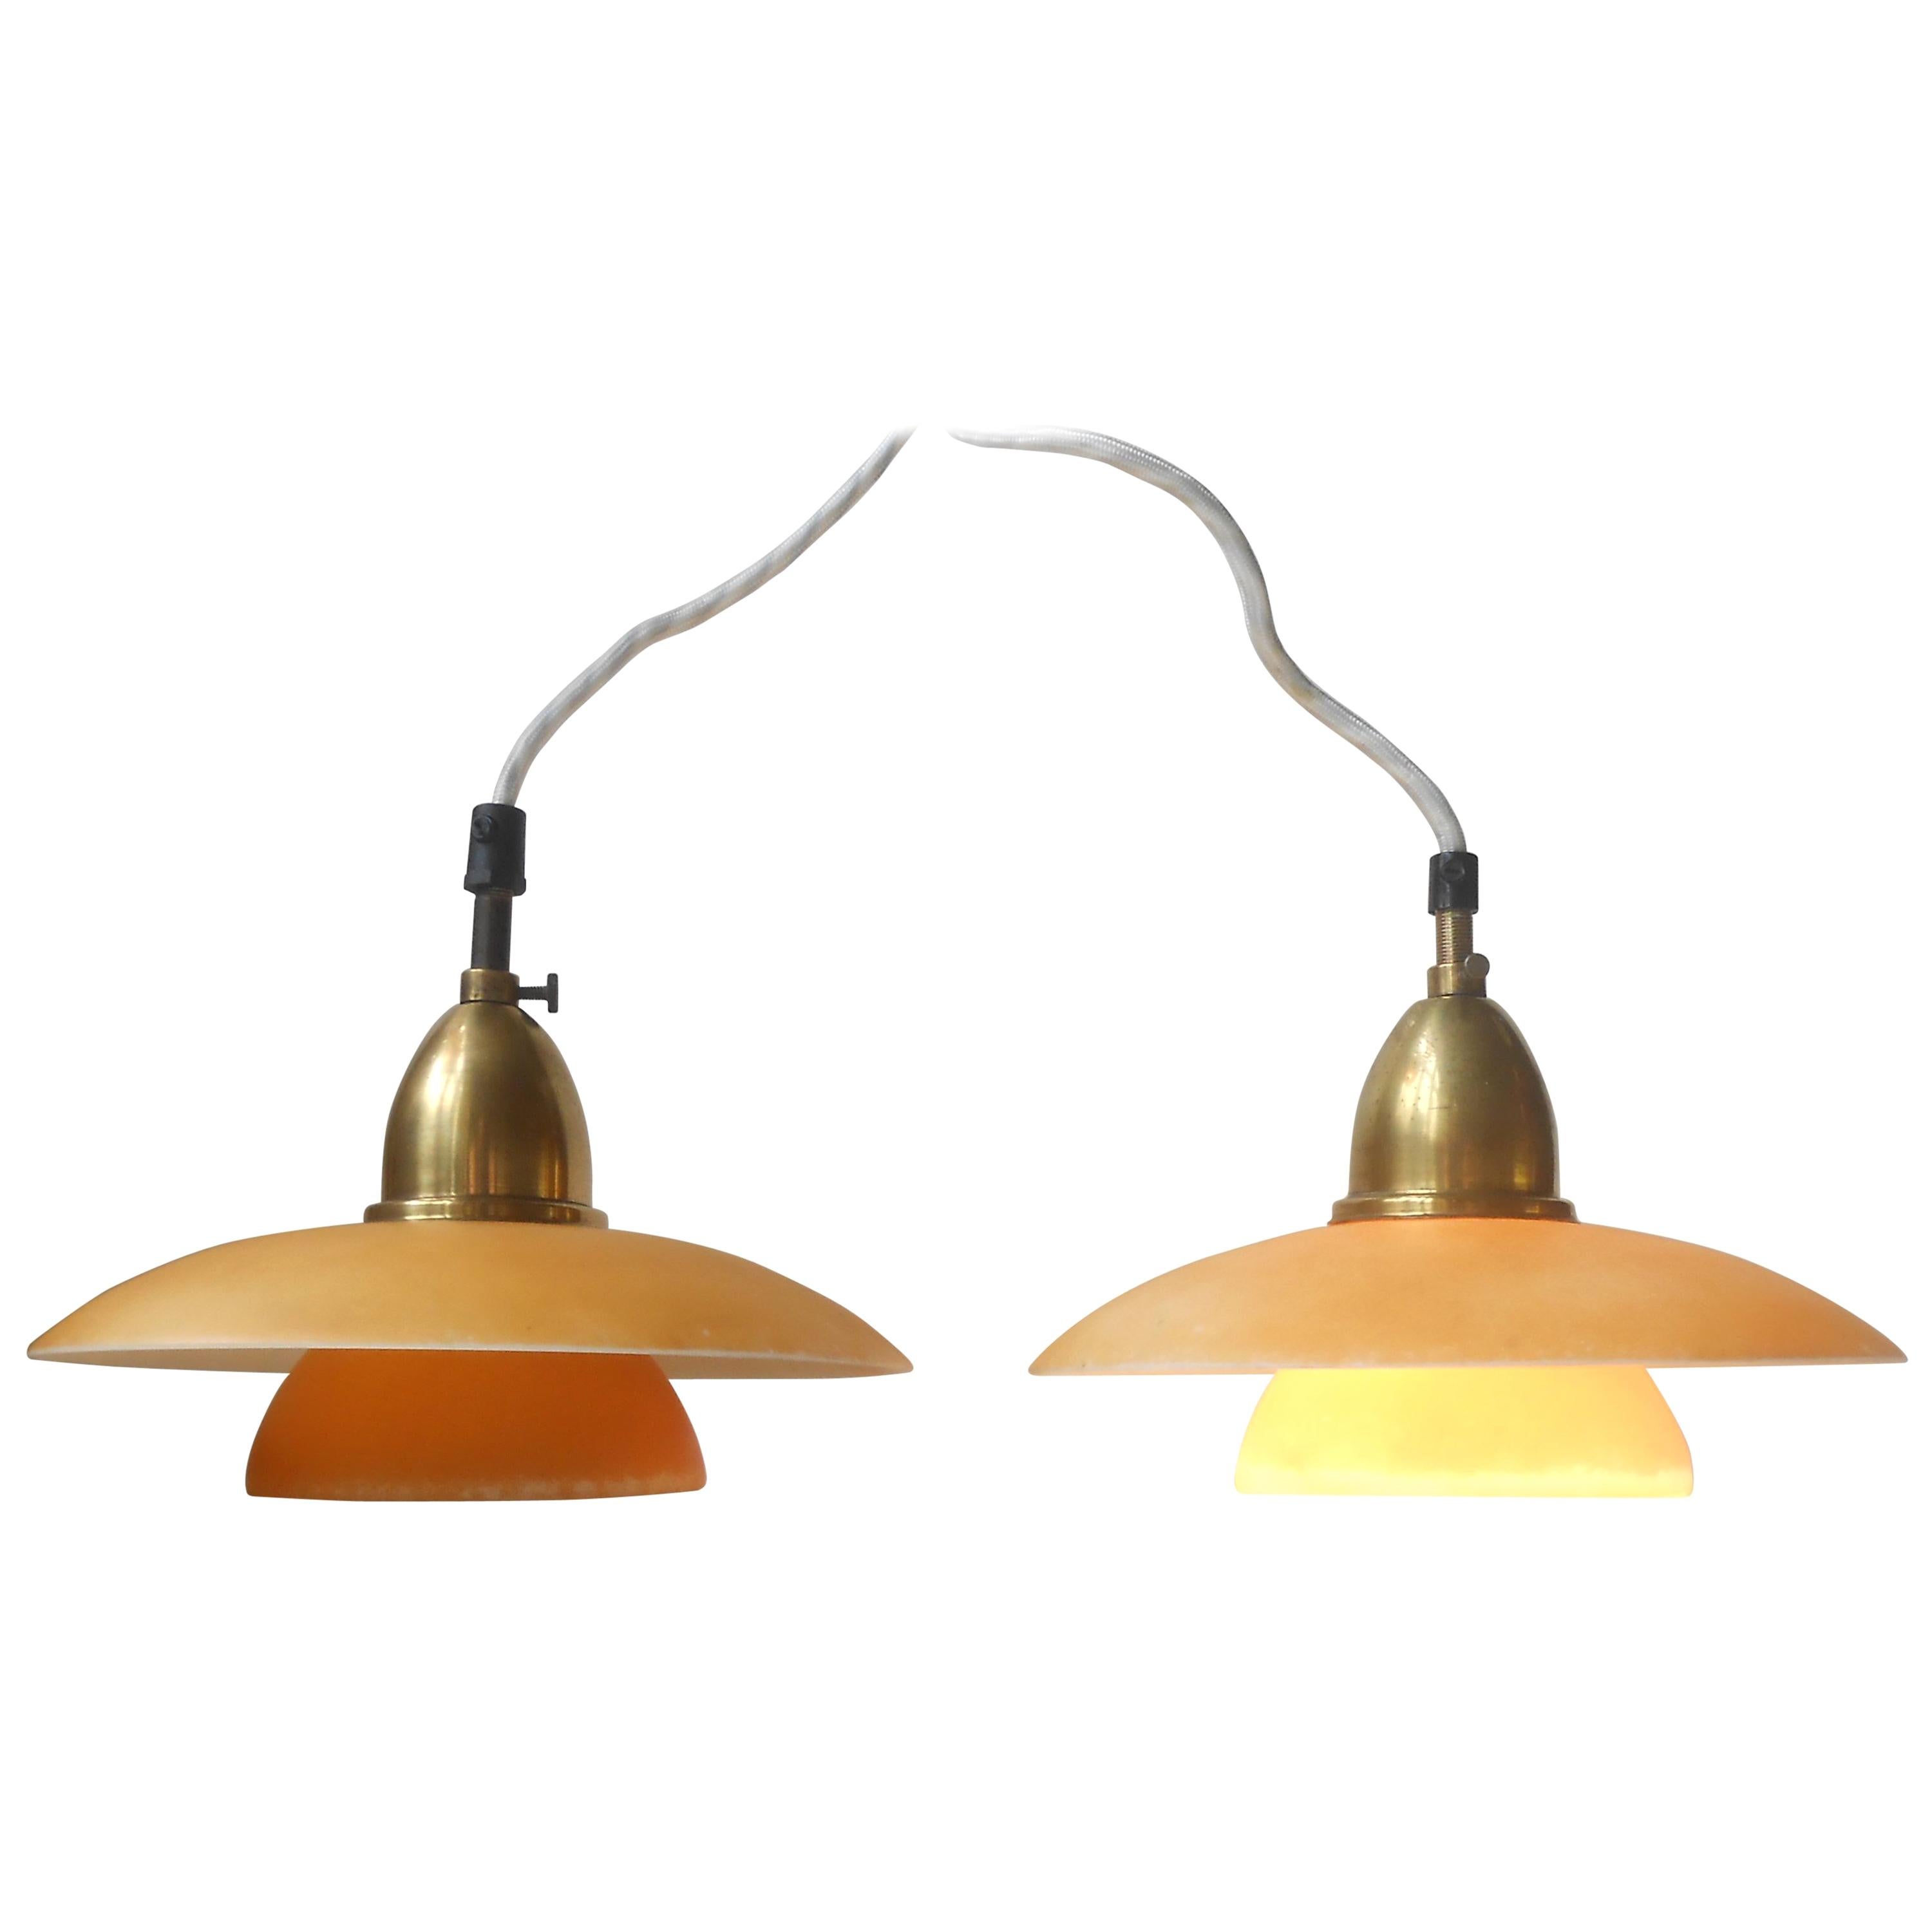 Rare Pair of Danish Functionalist Pendant Lights by Lyfa, 1930s